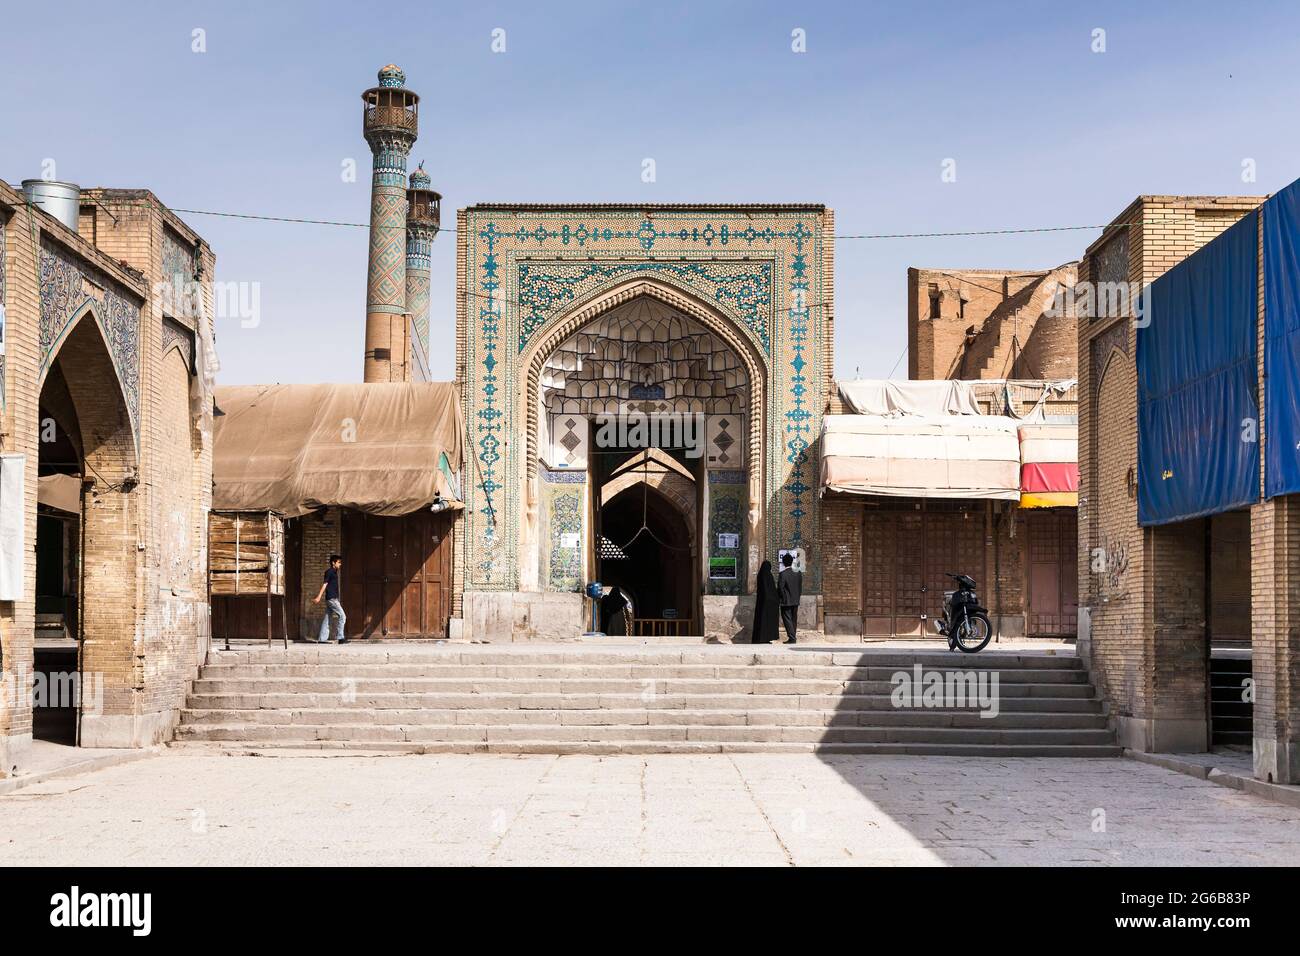 Jameh mosque bazaar hi-res stock photography and images - Alamy